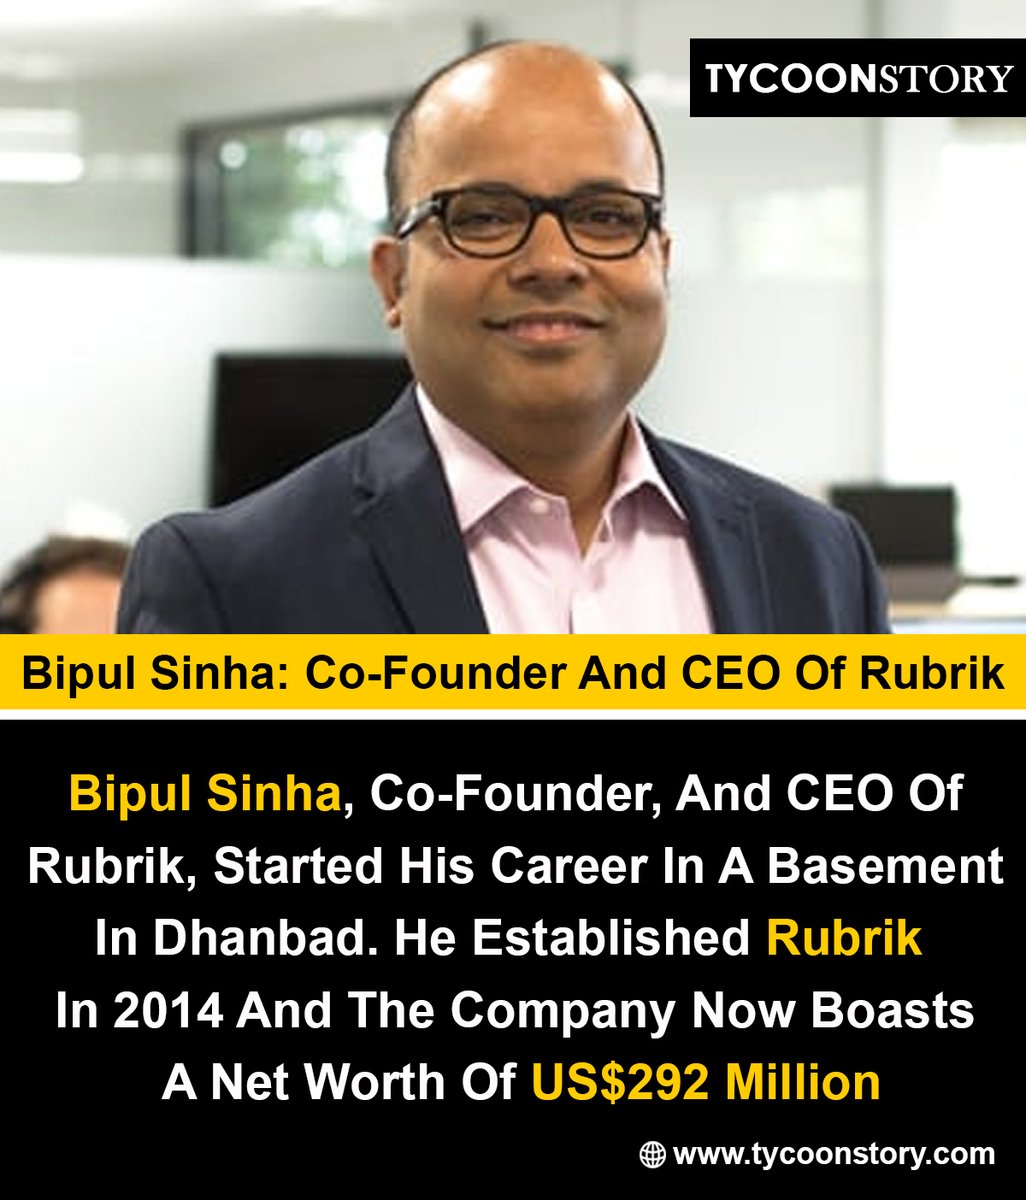 Bipul Sinha The Co-Founder And CEO Of Rubrik

#BipulSinha #RubrikCEO #TechEntrepreneur #DataManagement #CloudTechnology #StartupFounder #EnterpriseTech #Rubrik  #inspiration #motivation #technology #businessowner #businesssuccess @rubrikInc 

tycoonstory.com